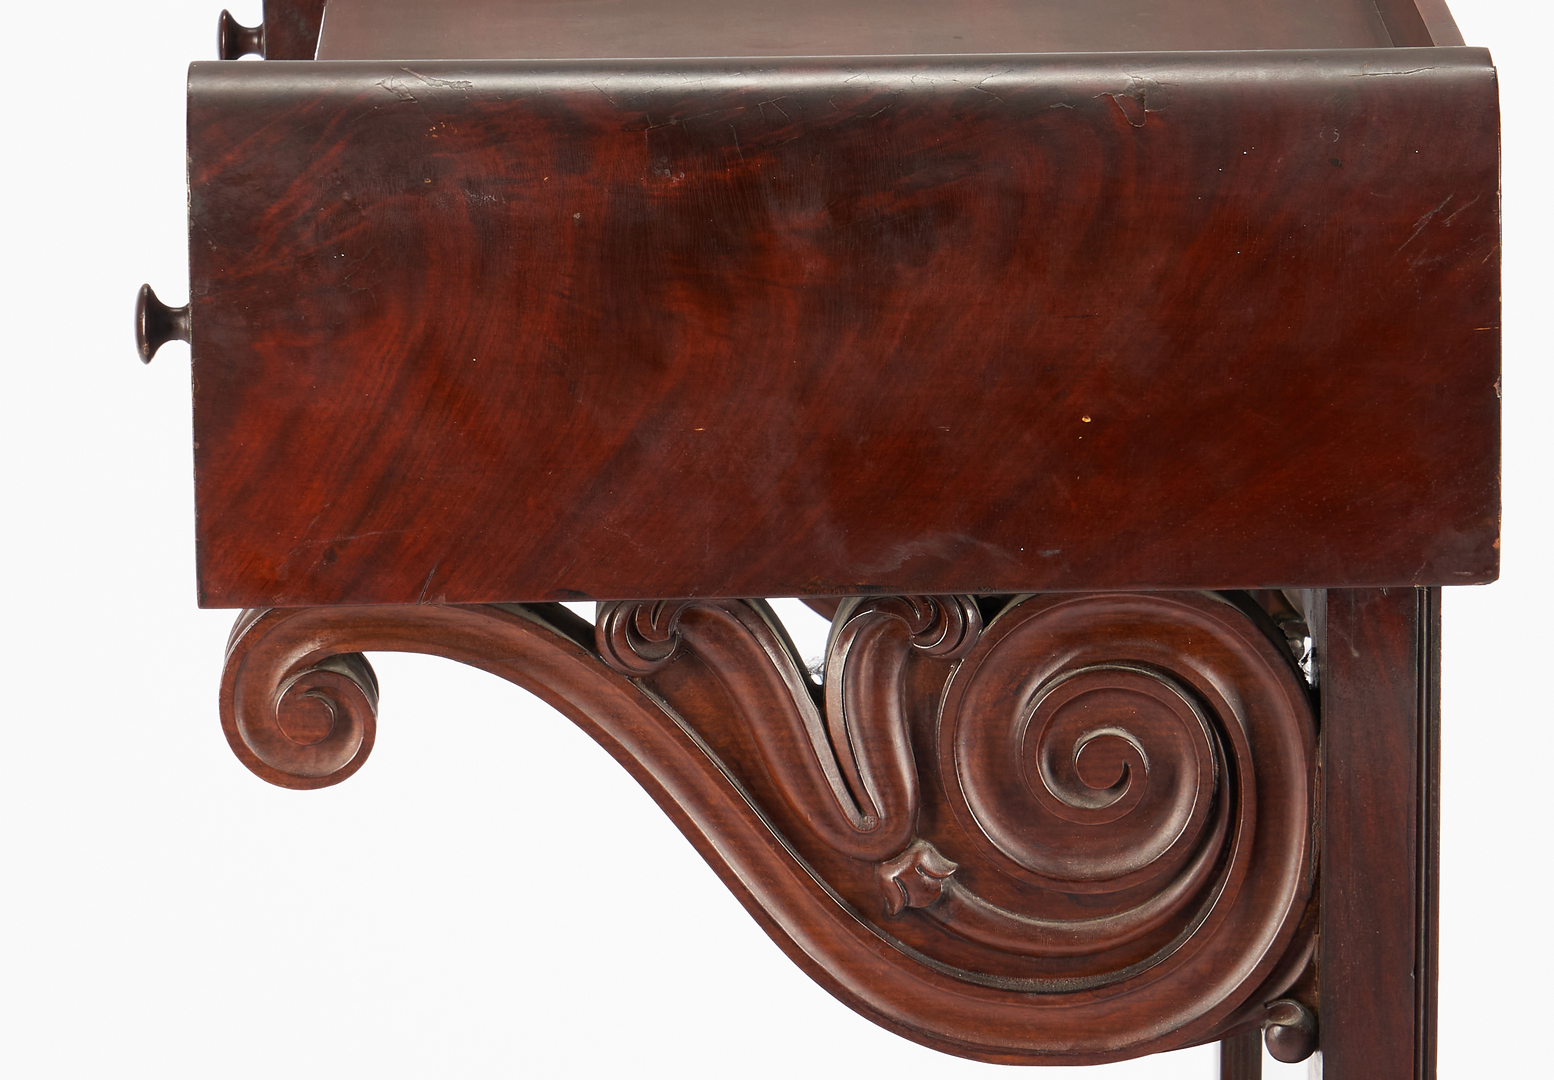 Lot 461: American Classical Revival Miniature Pier Table or Petite "Petticoat" Table